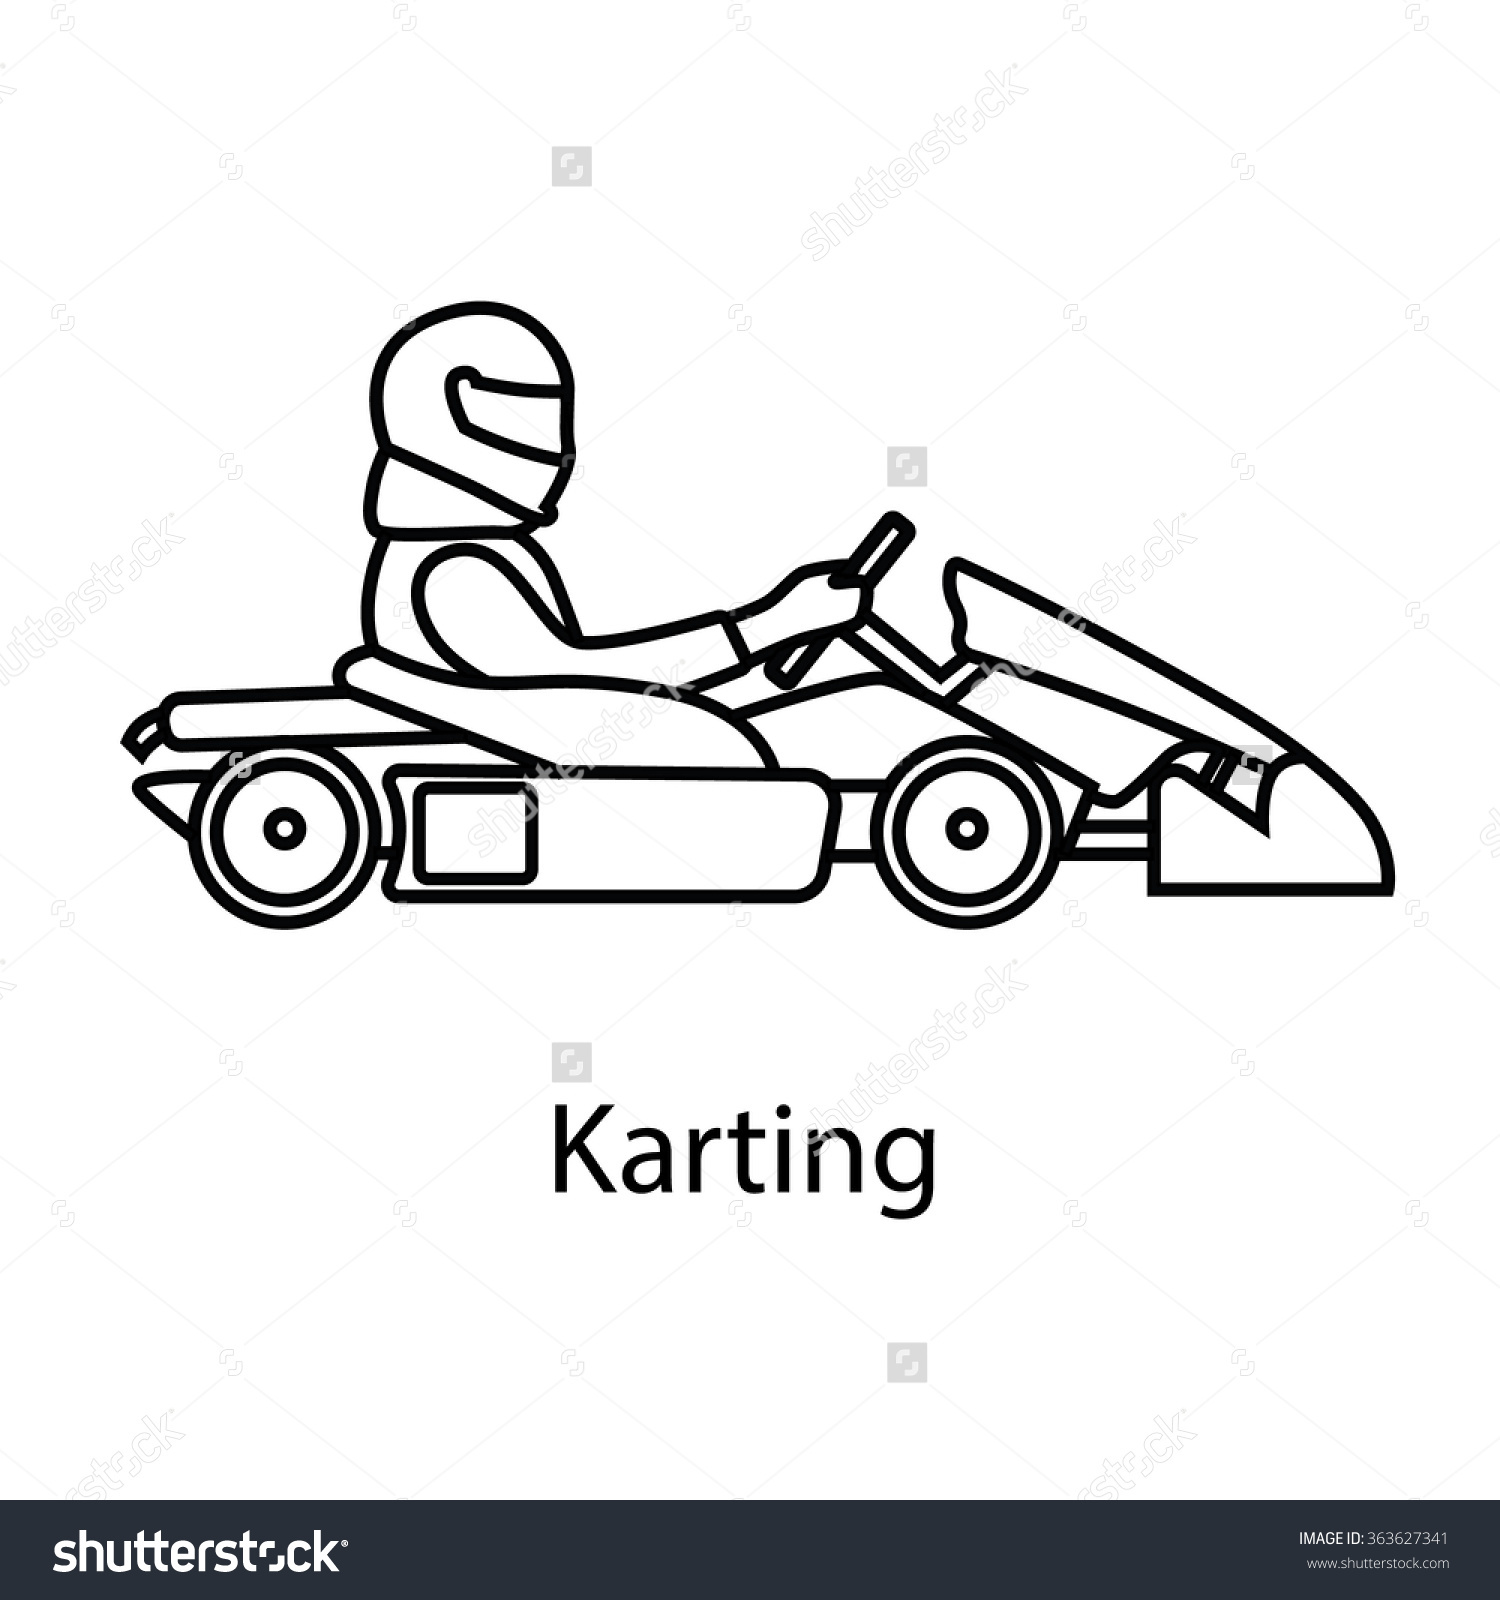 Logo Karting Man Racing On Sport Stock Vector 363627341.